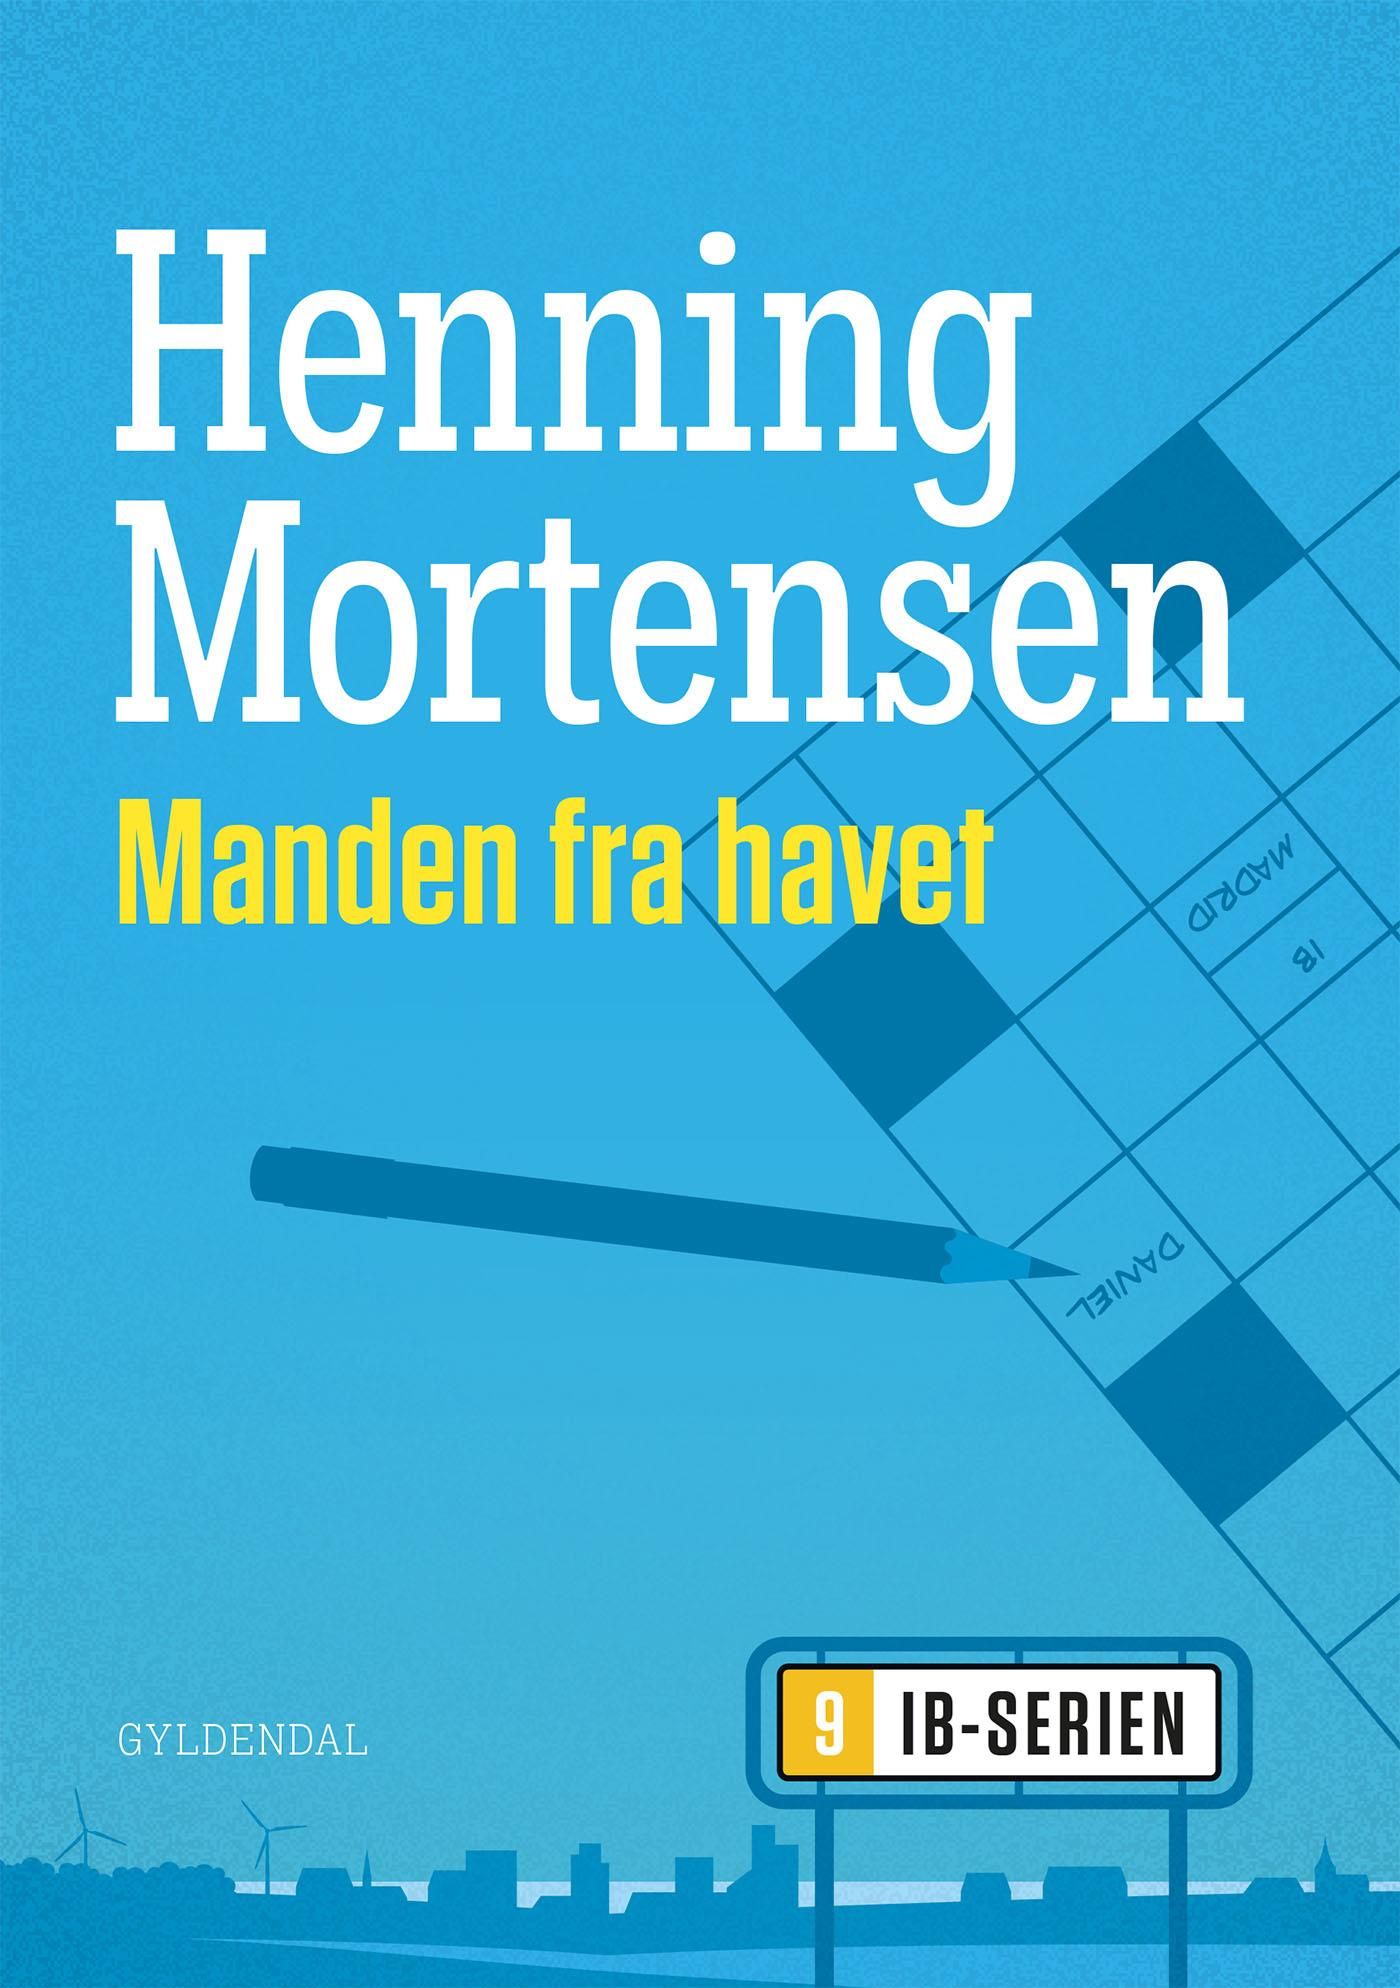 Manden fra havet, eBook by Henning Mortensen